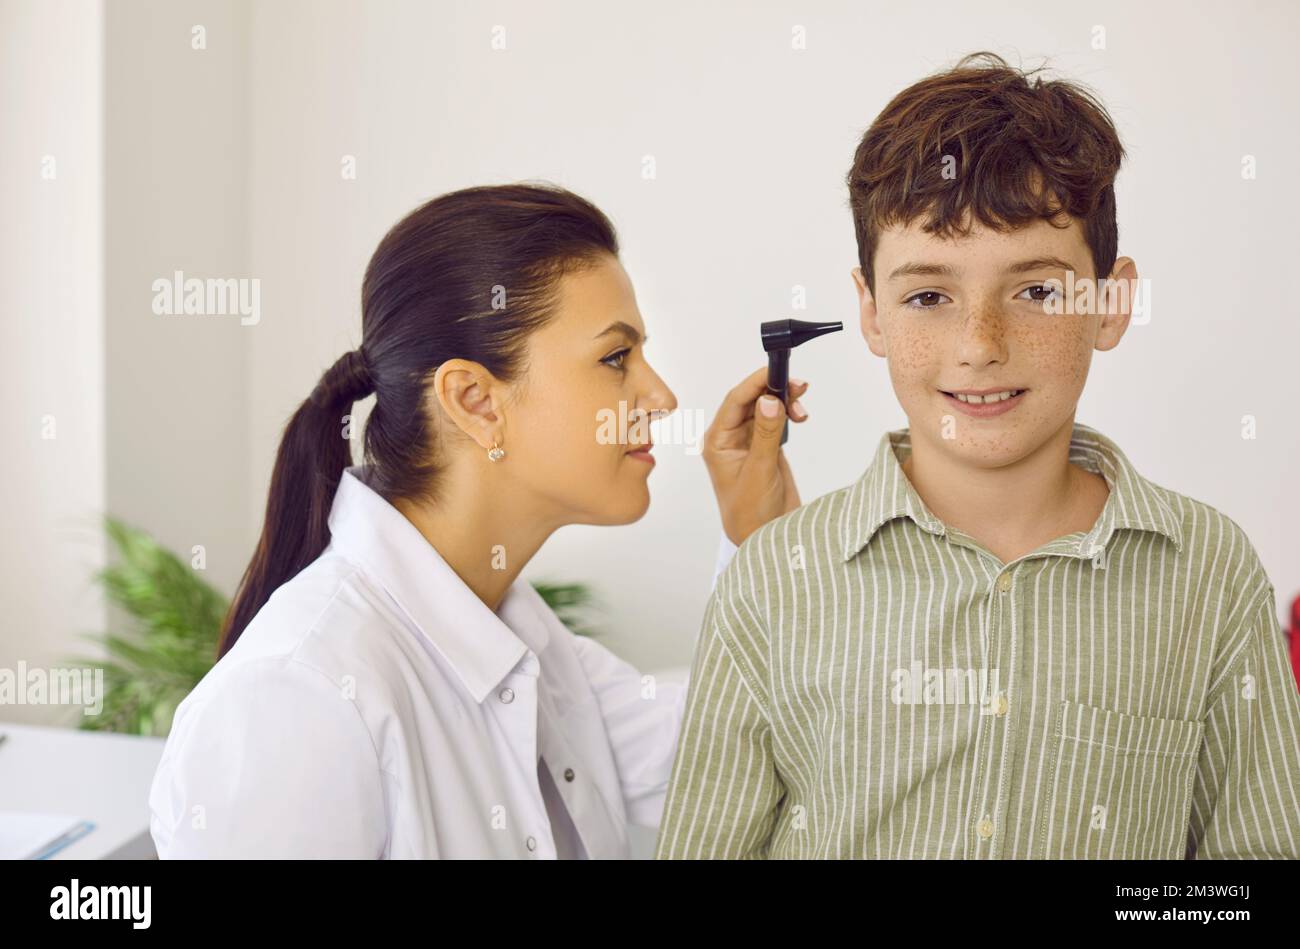 enfant visite medicale - otoscope Photos